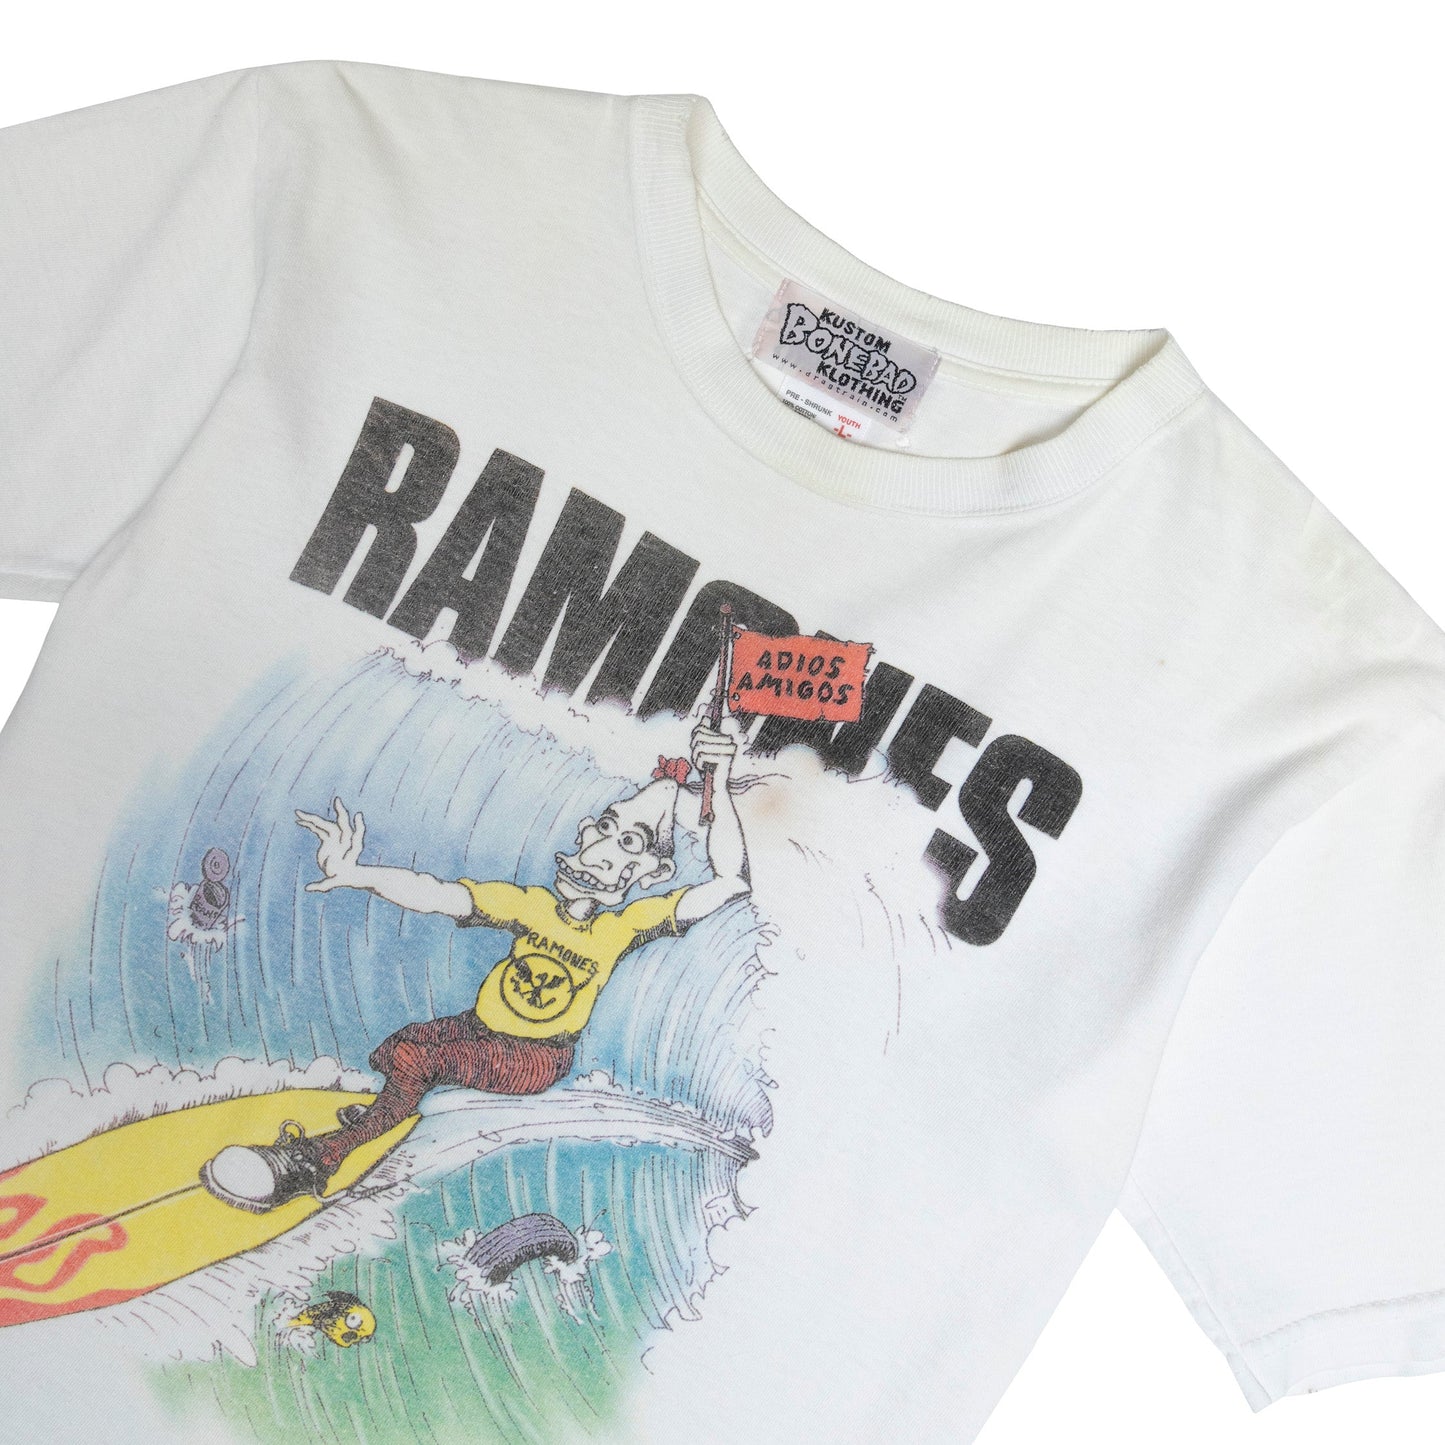 2003 Ramones Surfing Graphic Tee